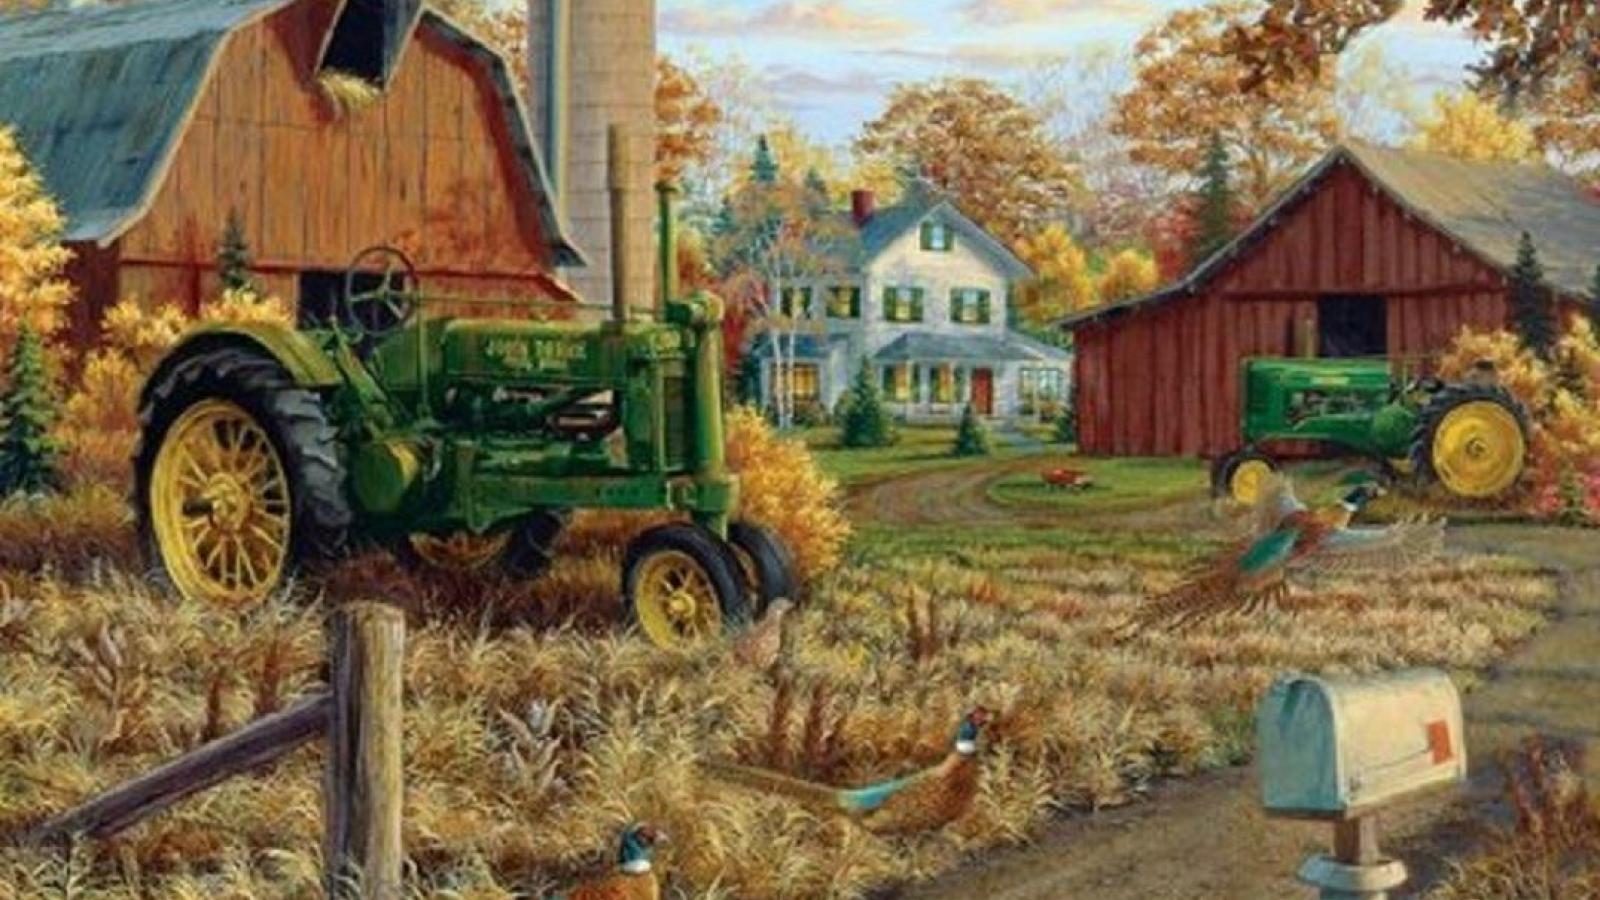 Rustic Farm In Autumn Wallpaper Hq Desktop